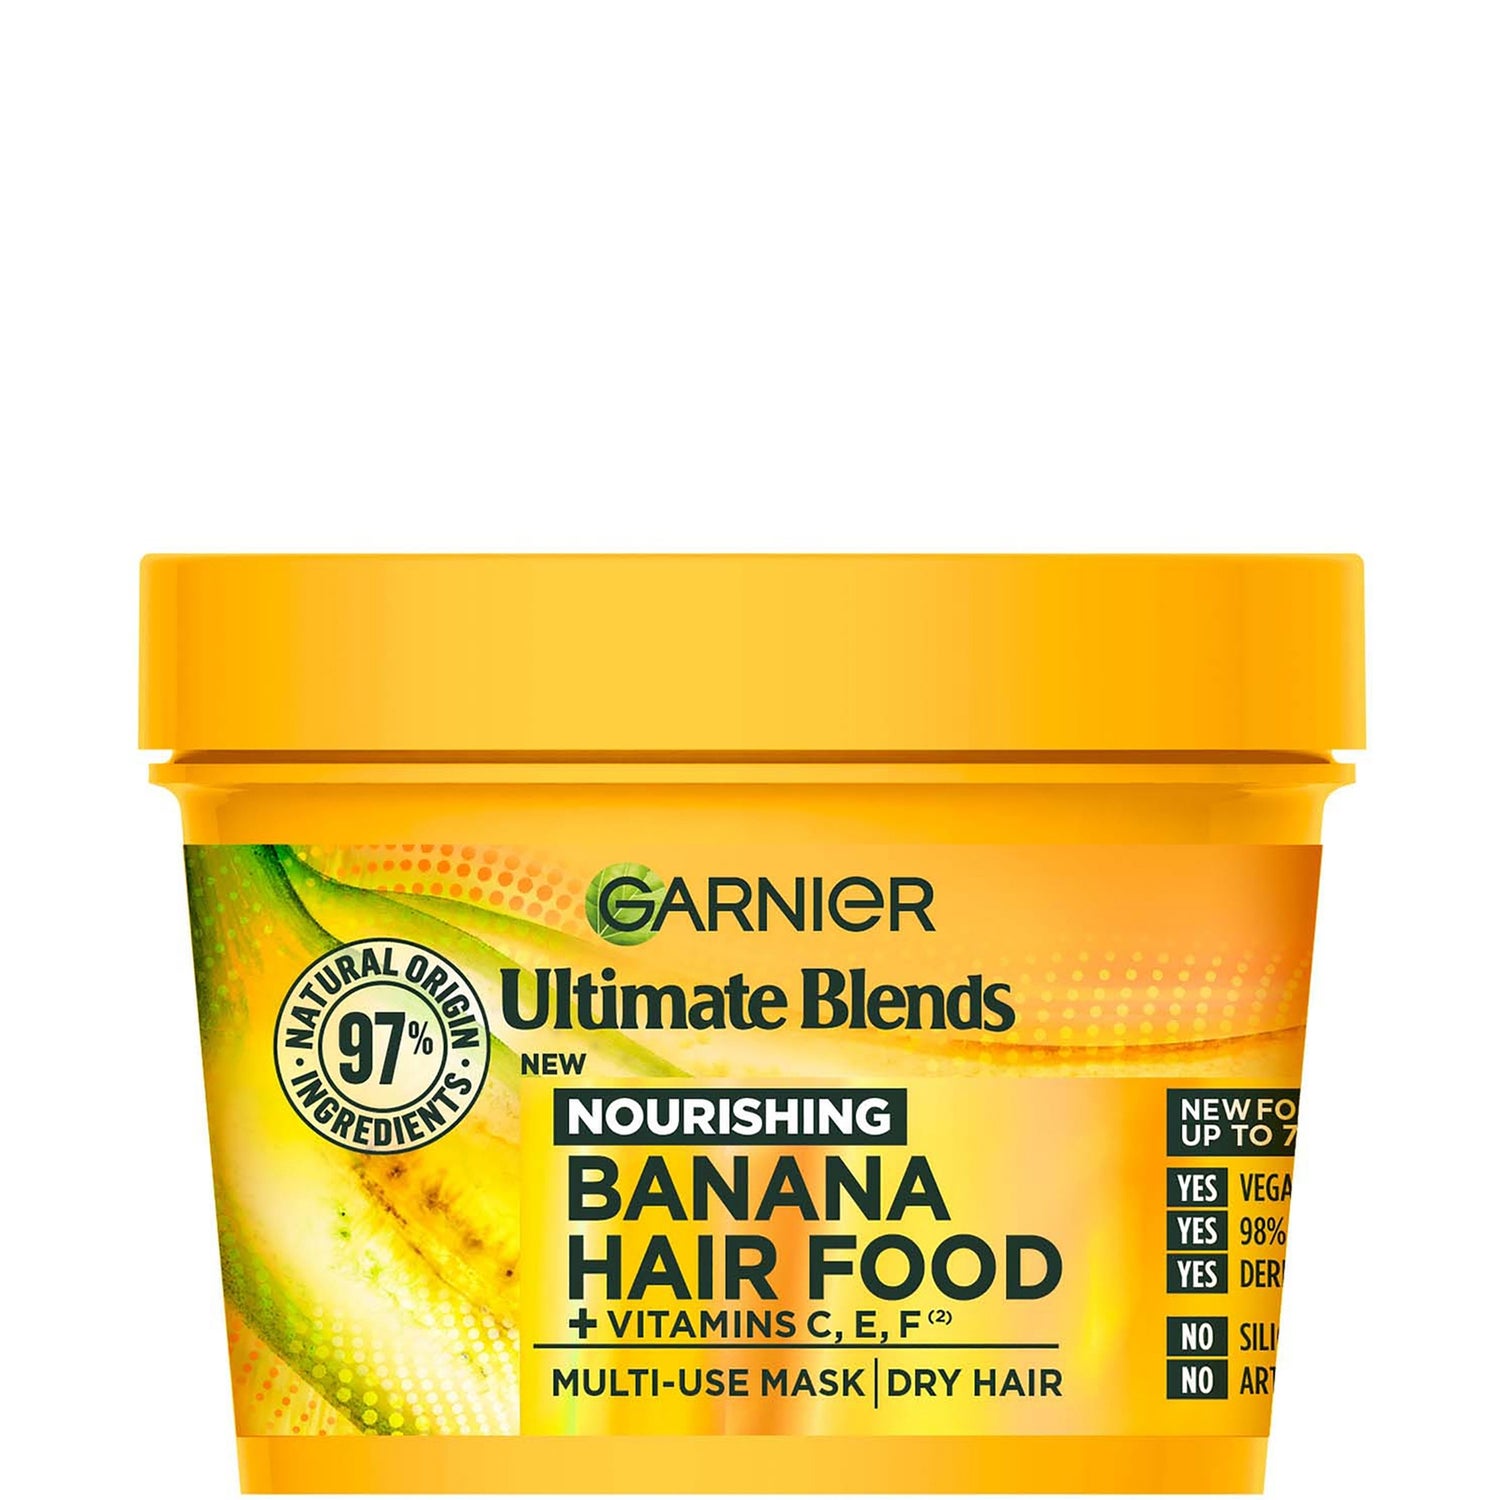 Garnier Ultimate Blends Hair Food Banana 3-in-1 Dry Hair Mask